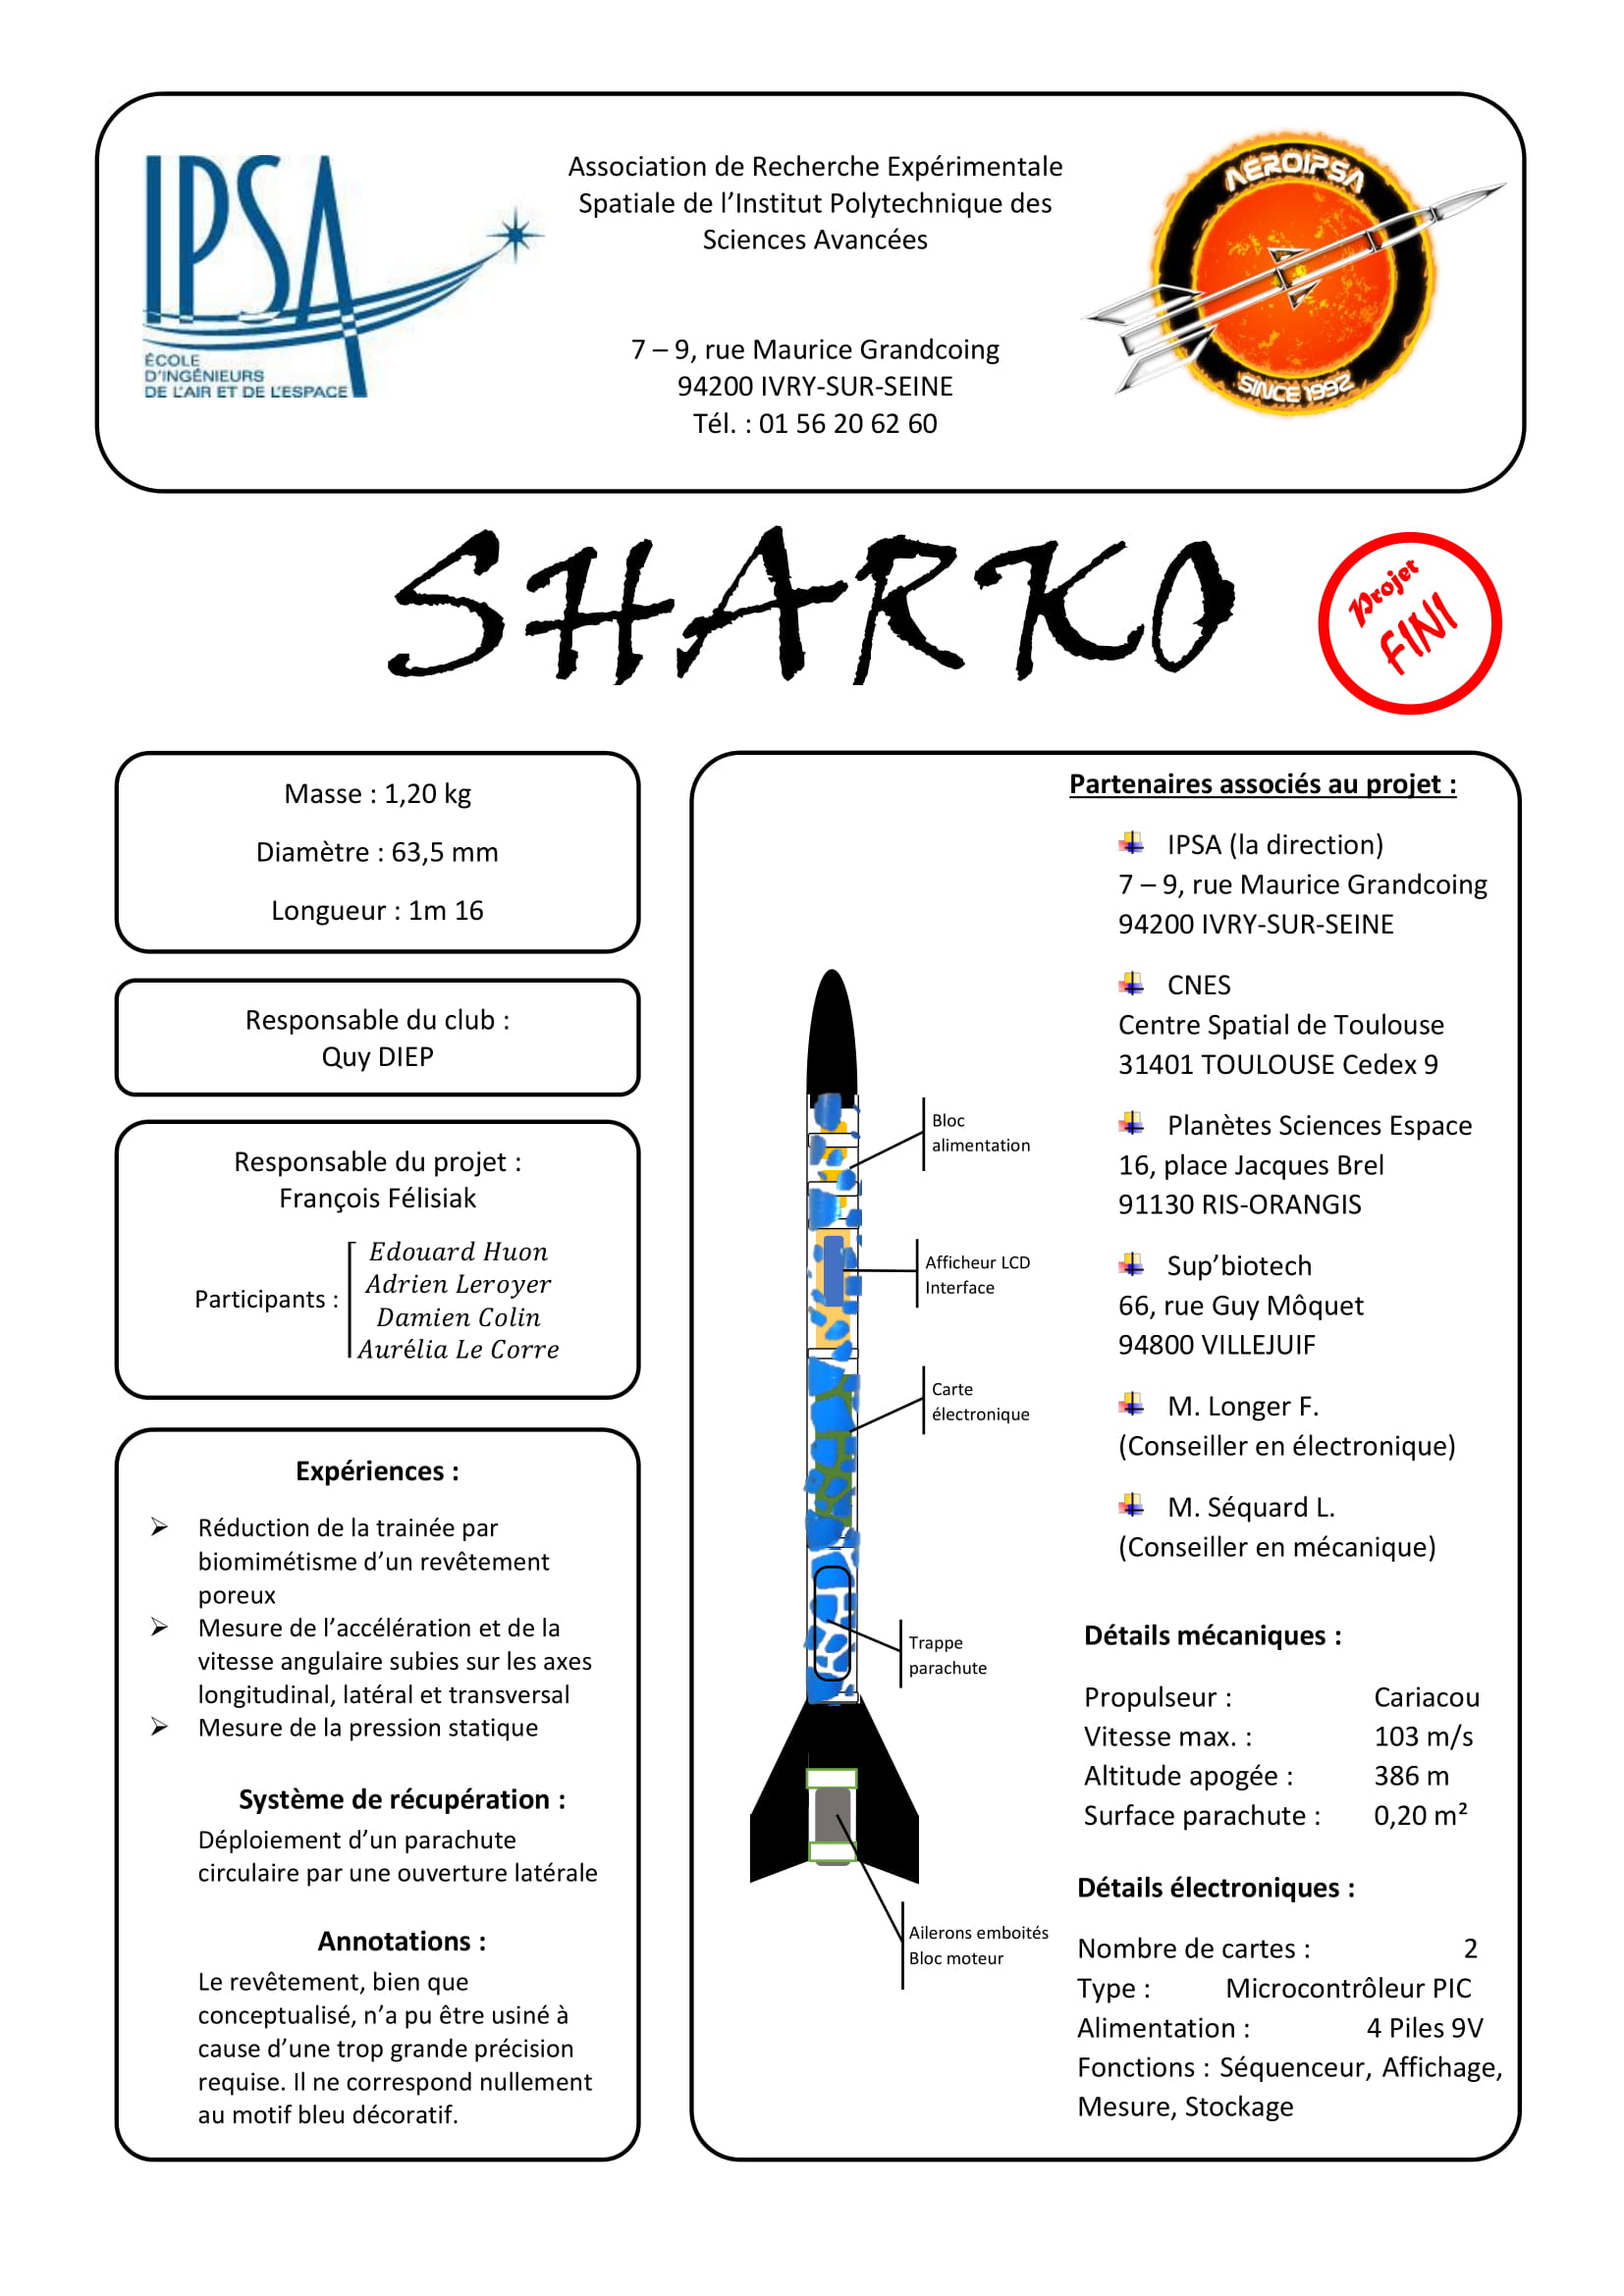 2015 Fiche Signalétique Sharko-1.jpg